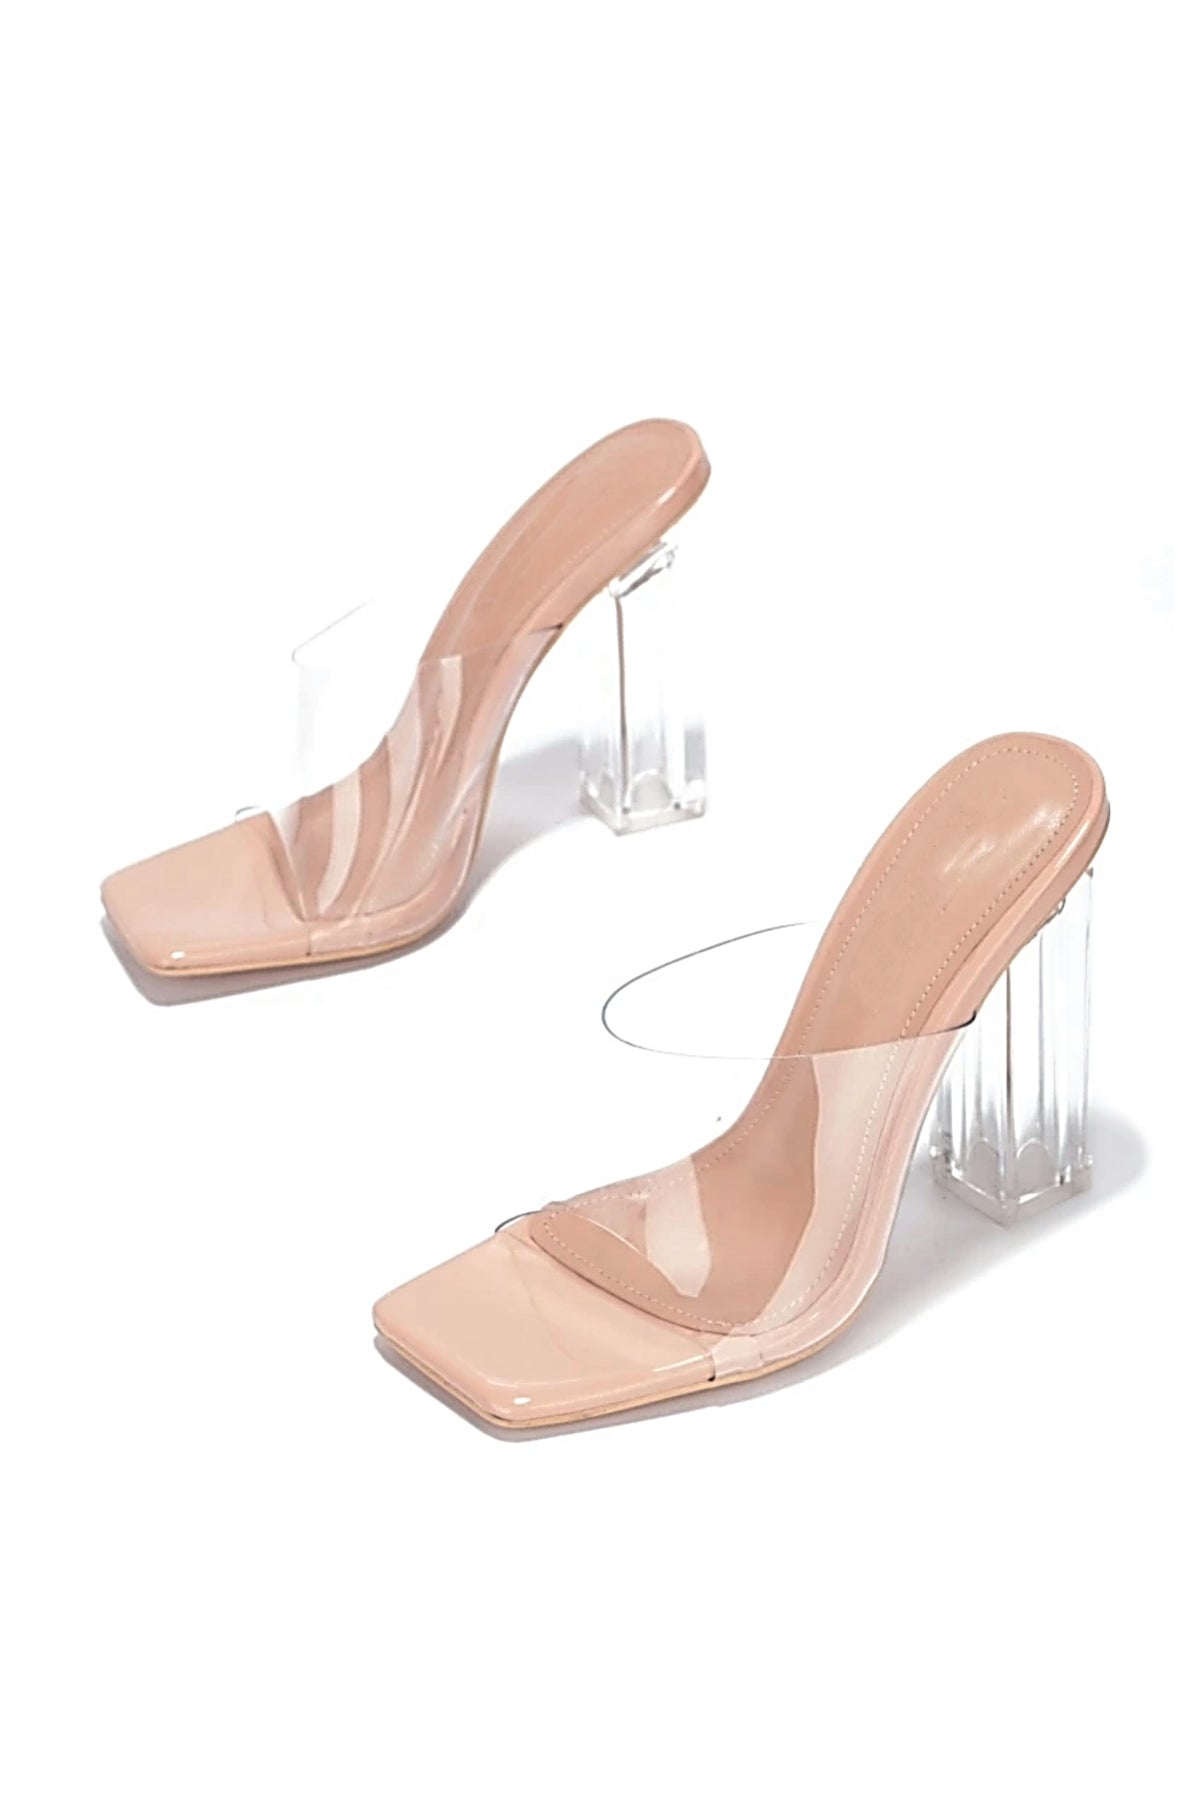 CALI Nude Clear Heels  Clear Block Heels – COVET SHOES